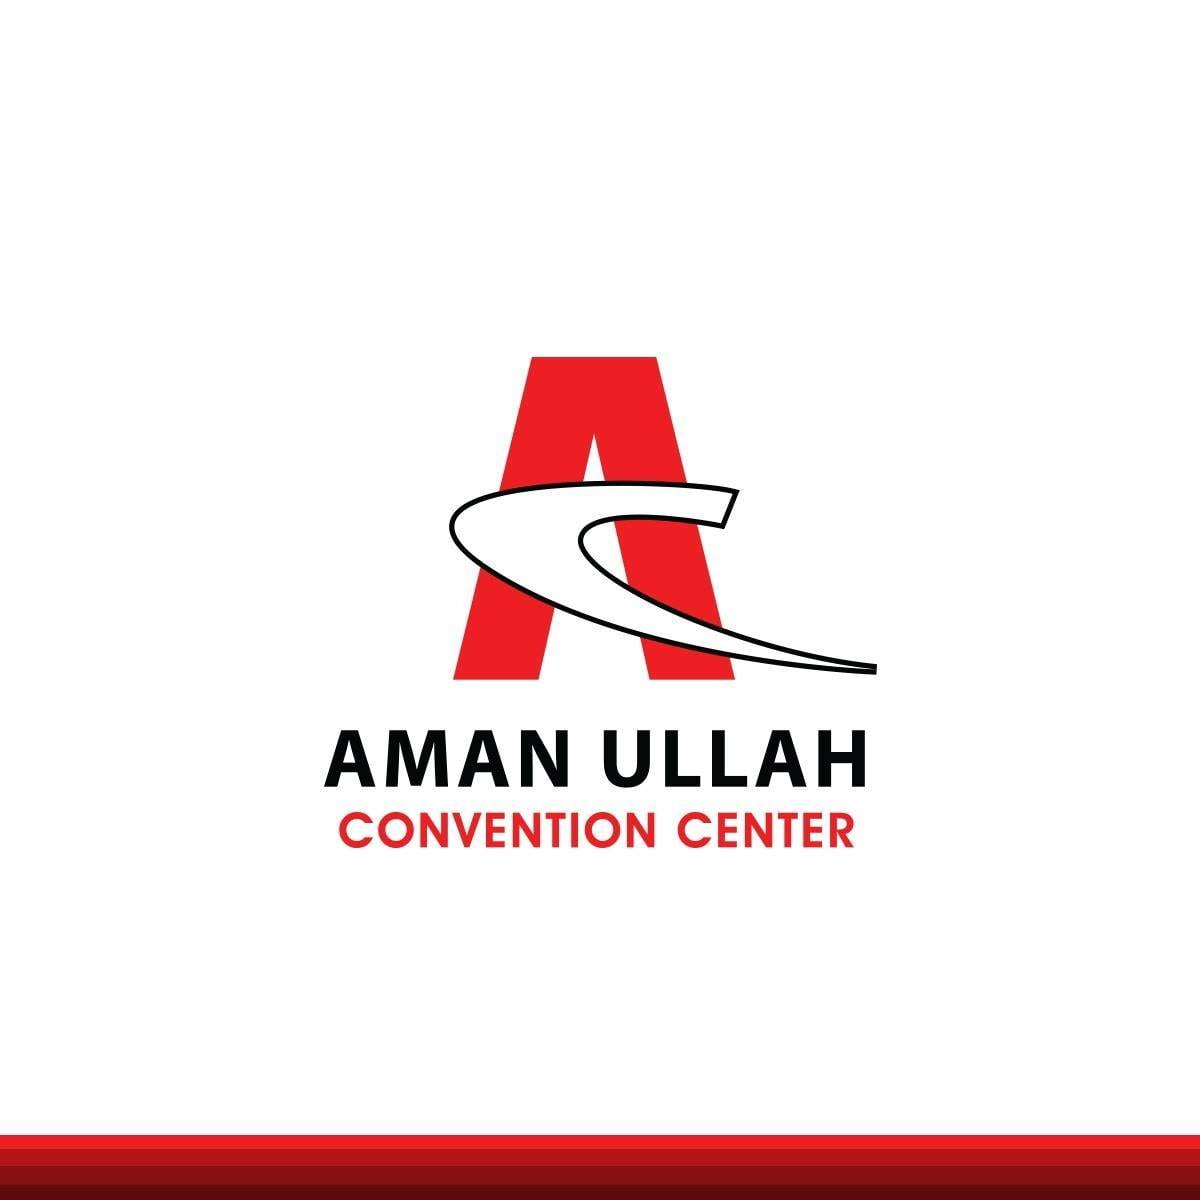 Aman-Ullah Convention Center